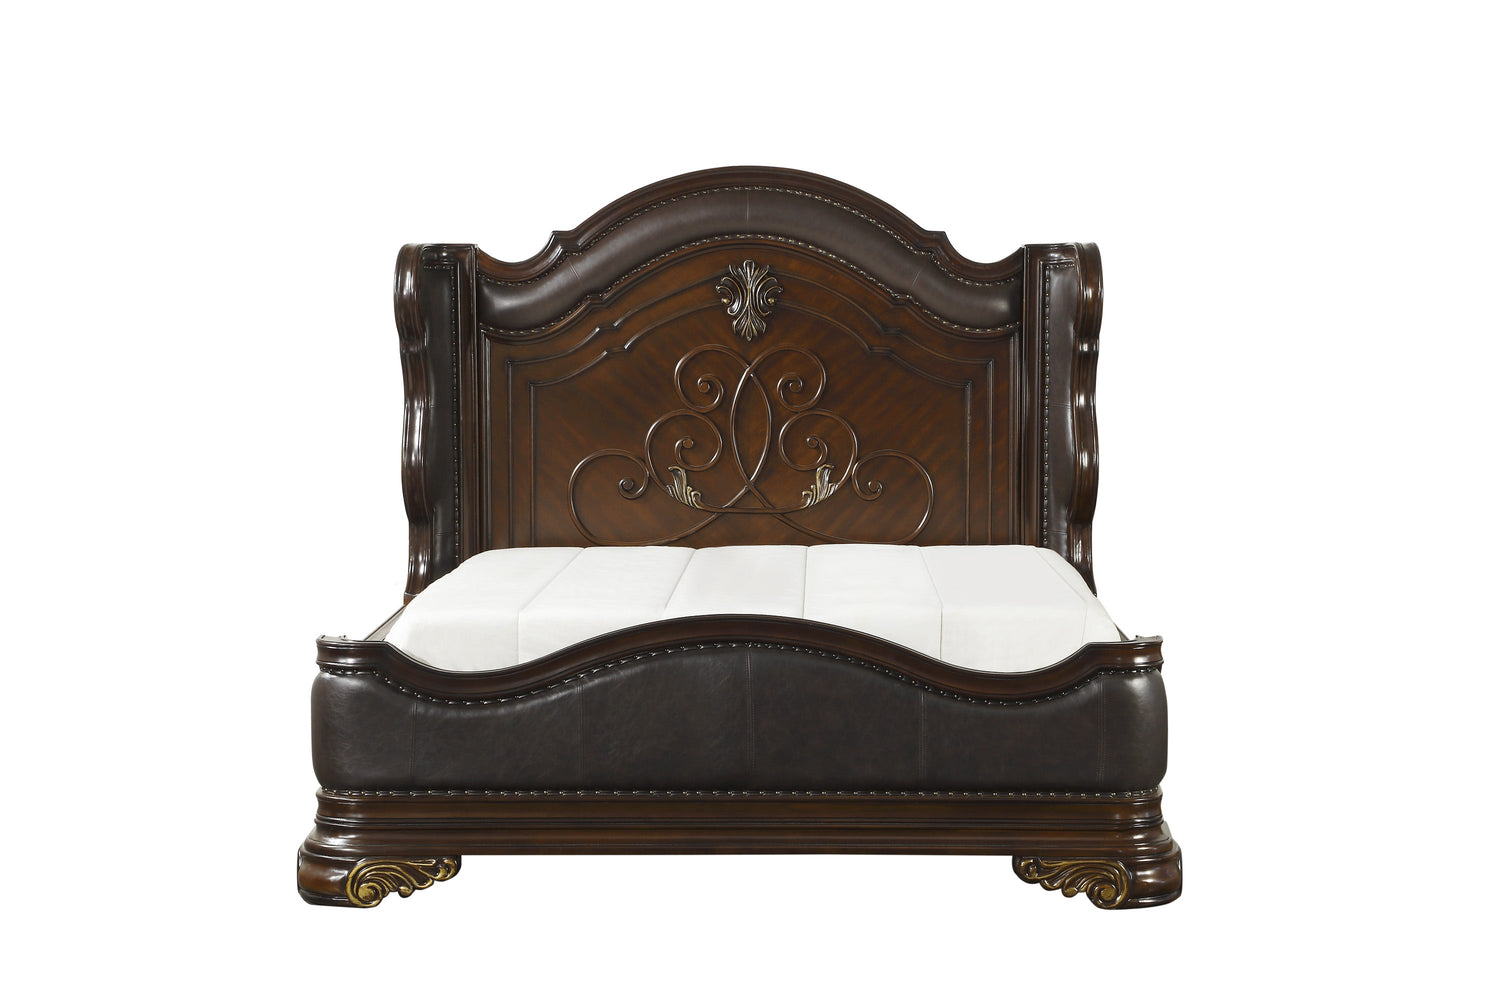 Royal Highlands Rich Cherry Queen Upholstered Panel Bed - SET | 1603-1 | 1603-2 | 1603-P - Bien Home Furniture &amp; Electronics